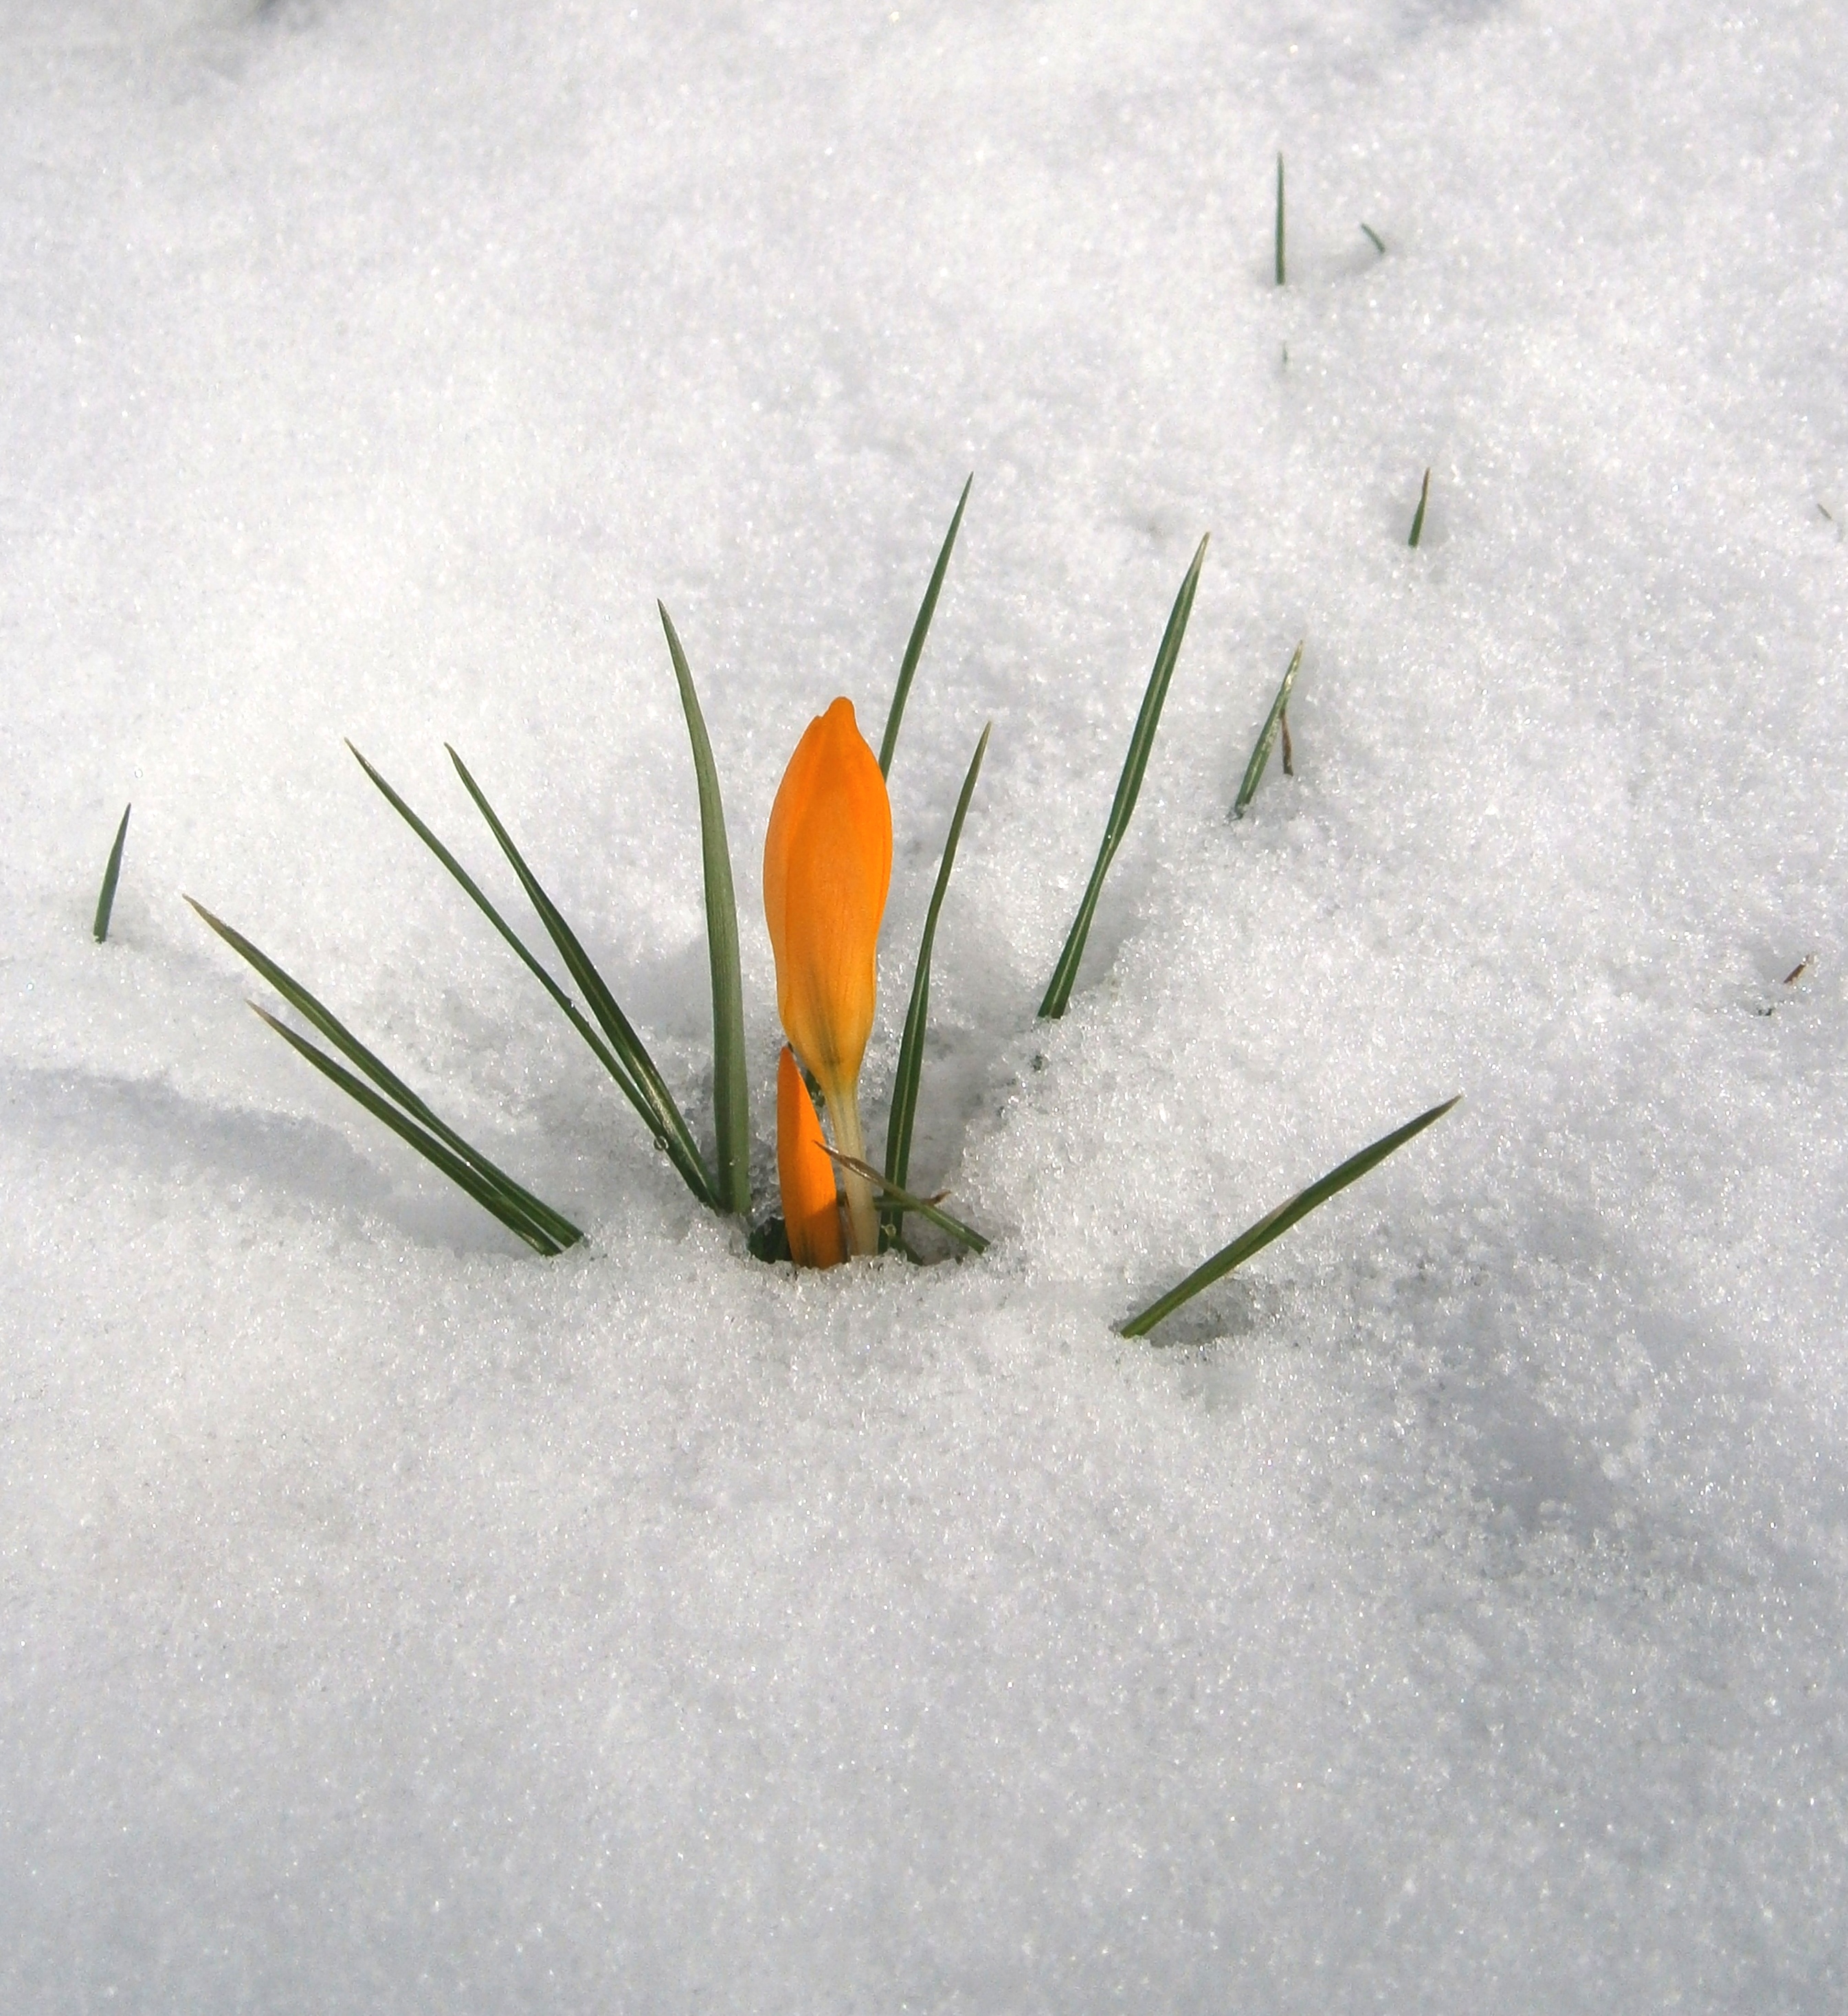 Crocus flavus ssp flavus in snow